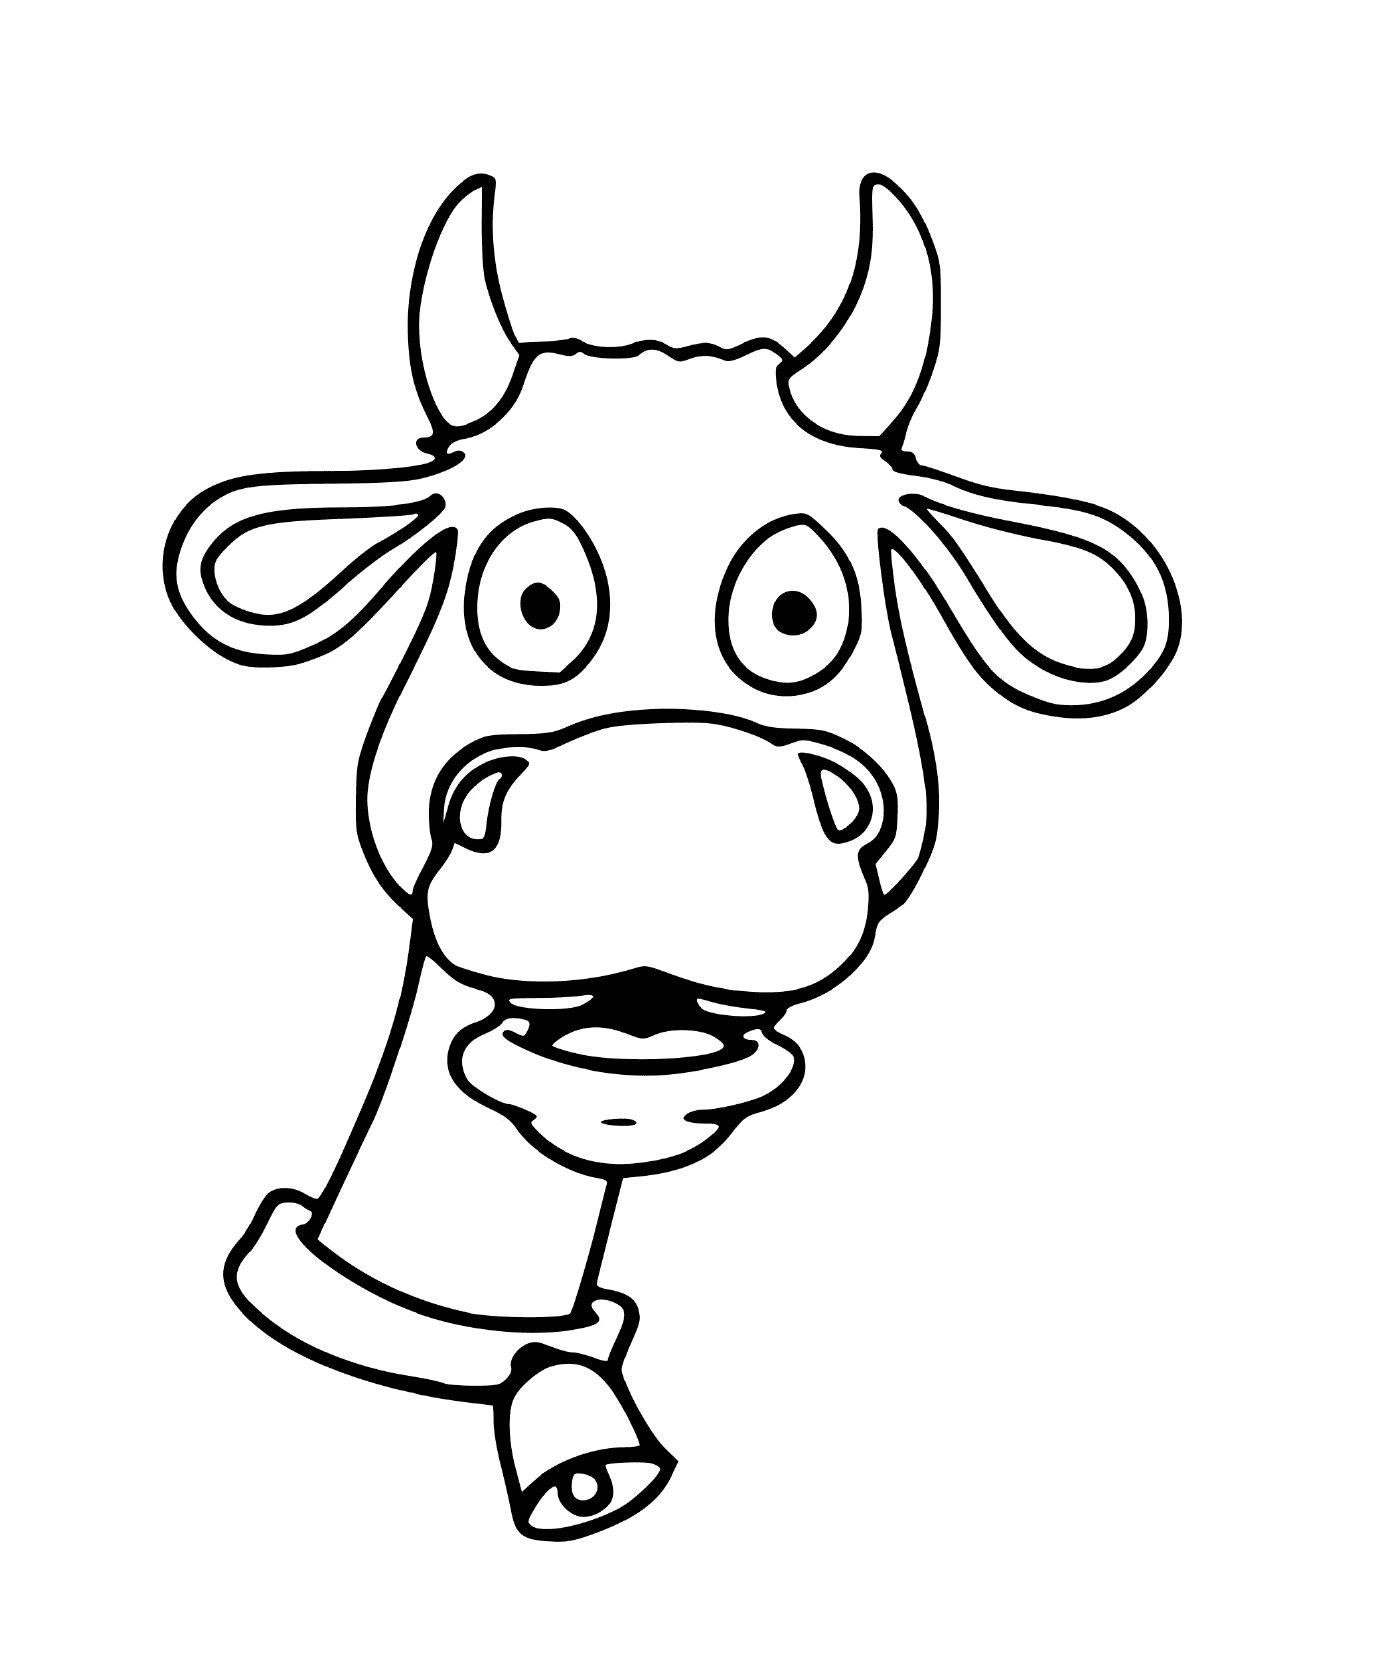  Testa di mucca con campana 